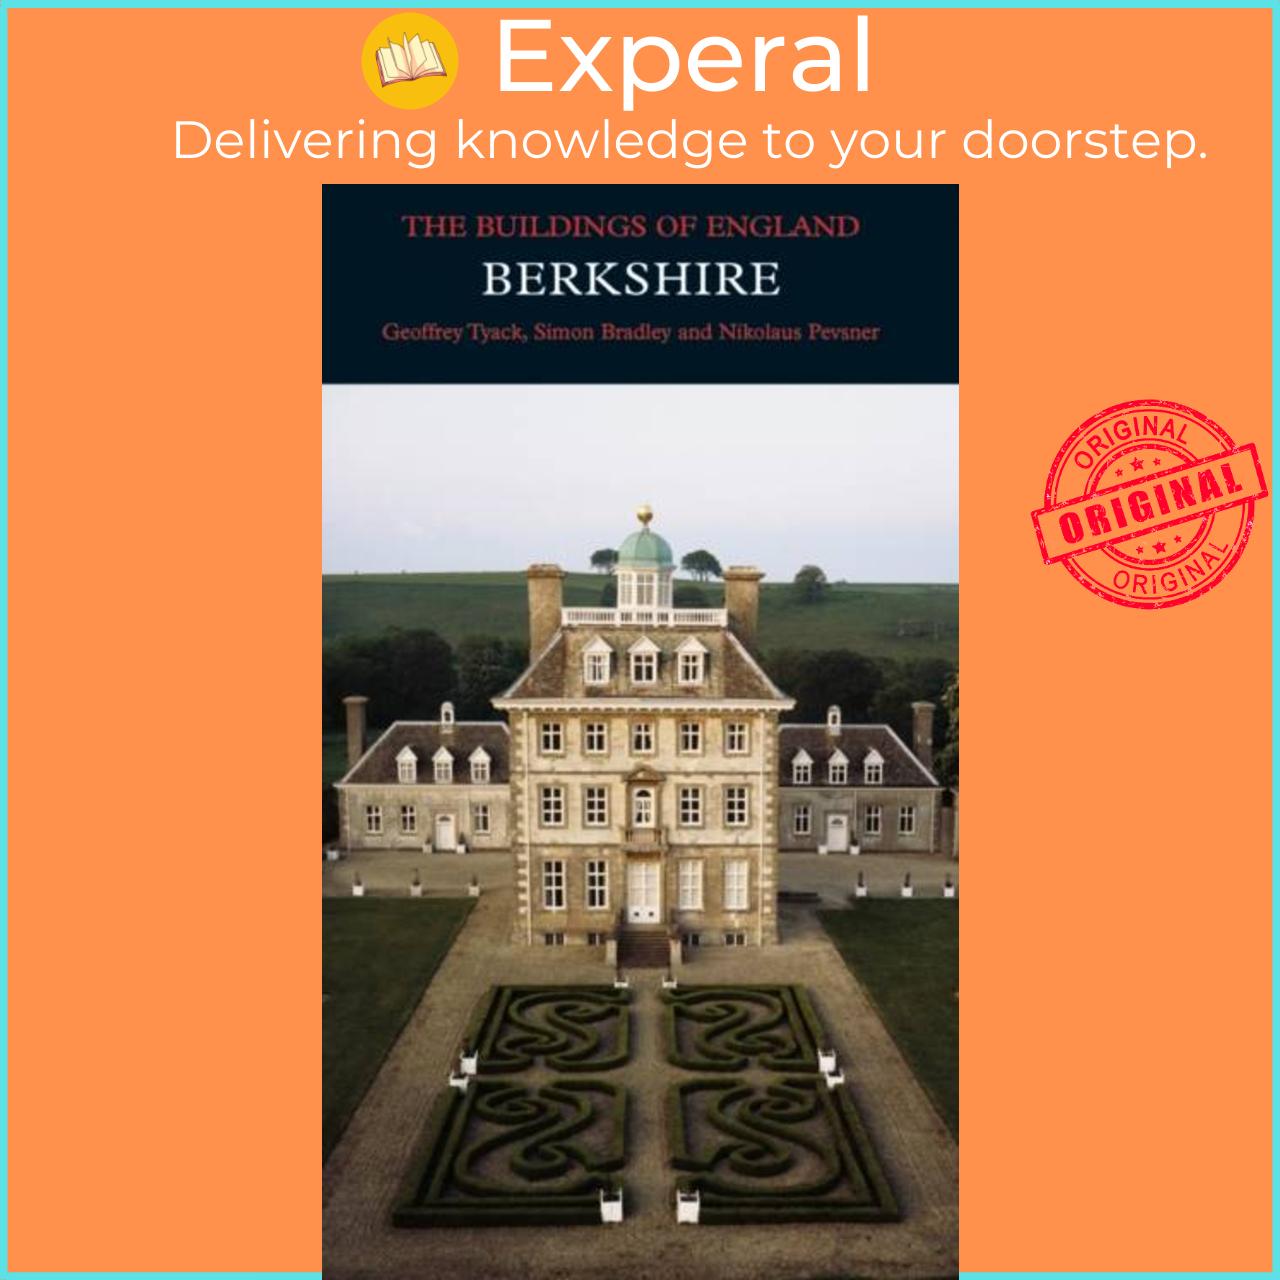 Sách - Berkshire by Nikolaus Pevsner (UK edition, hardcover)